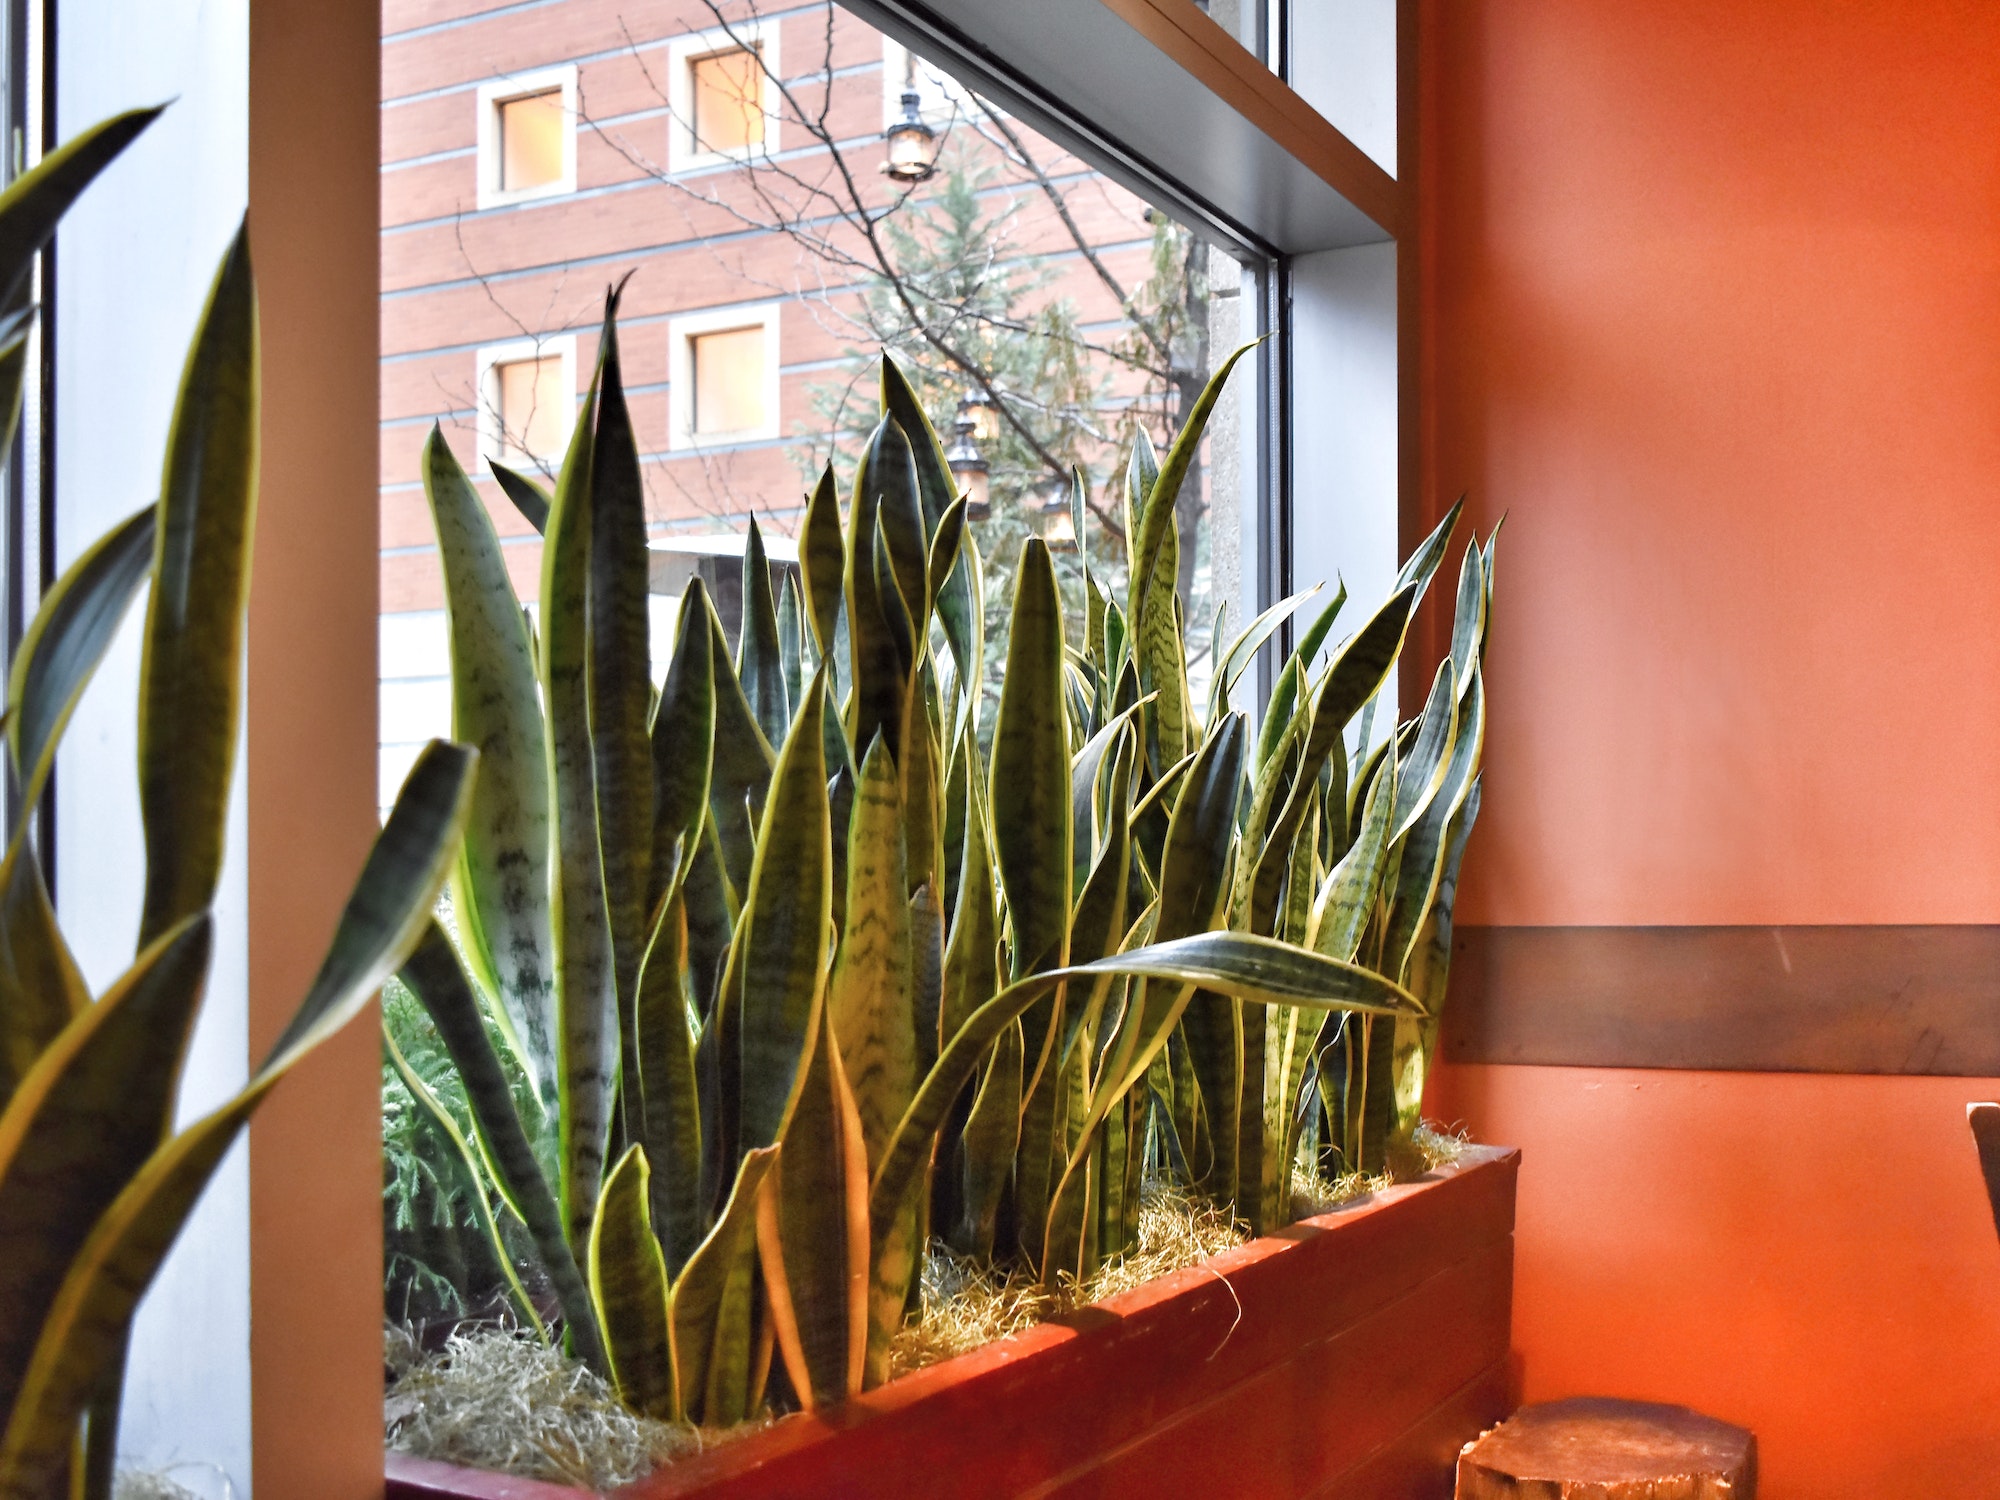 Snake plant sansevieria in planter on window sill in orange room office restaurant interior design